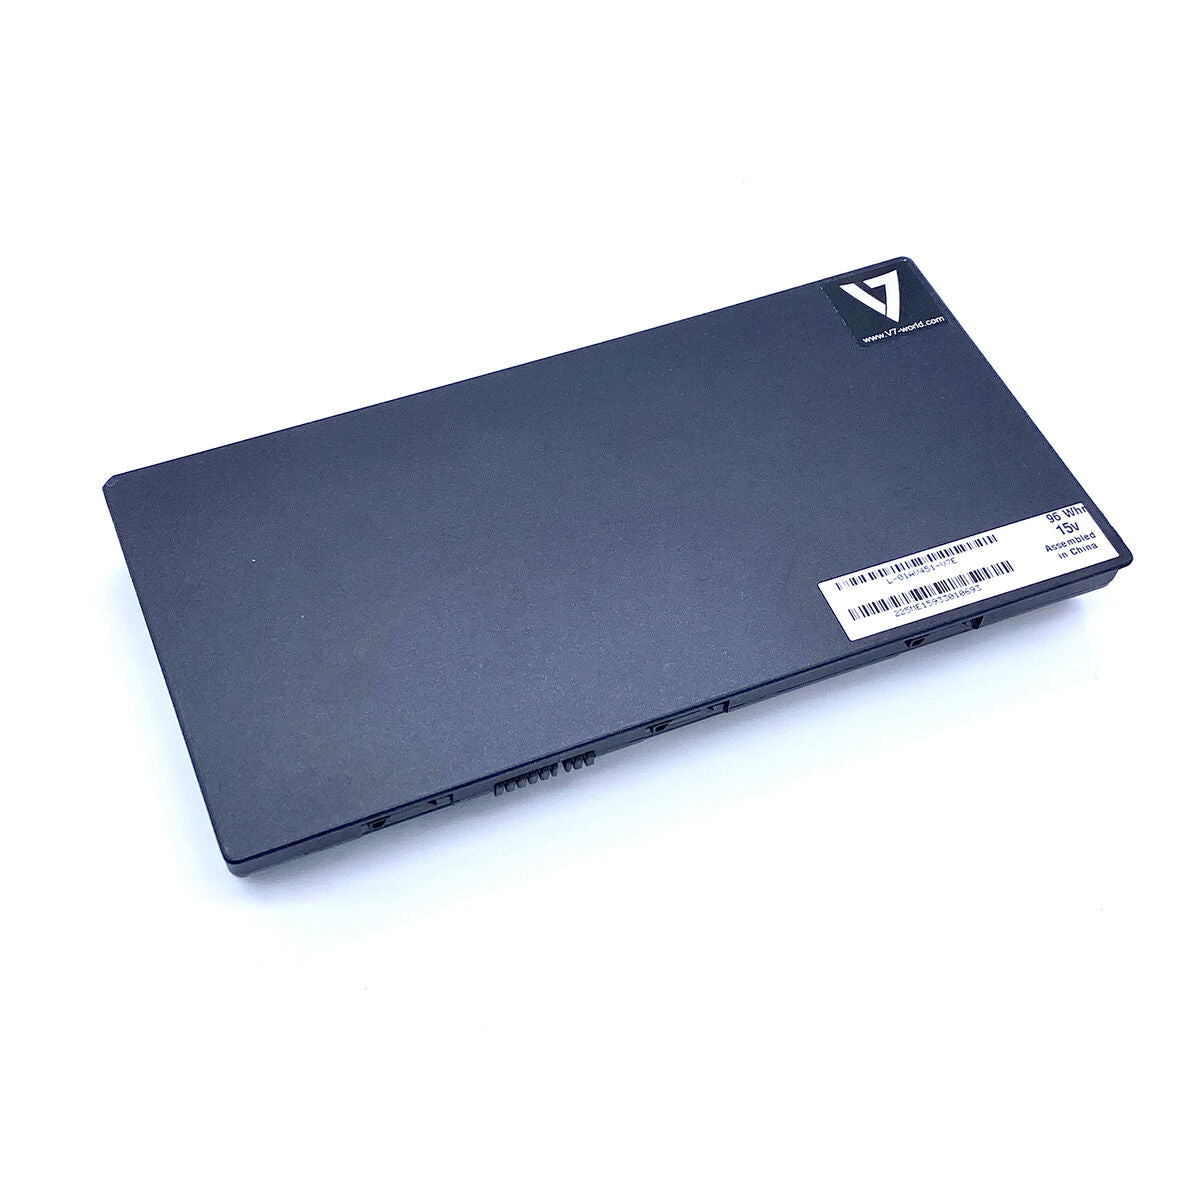 Батарея для ноутбука V7 L-01AV451-V7E 6400 mAh